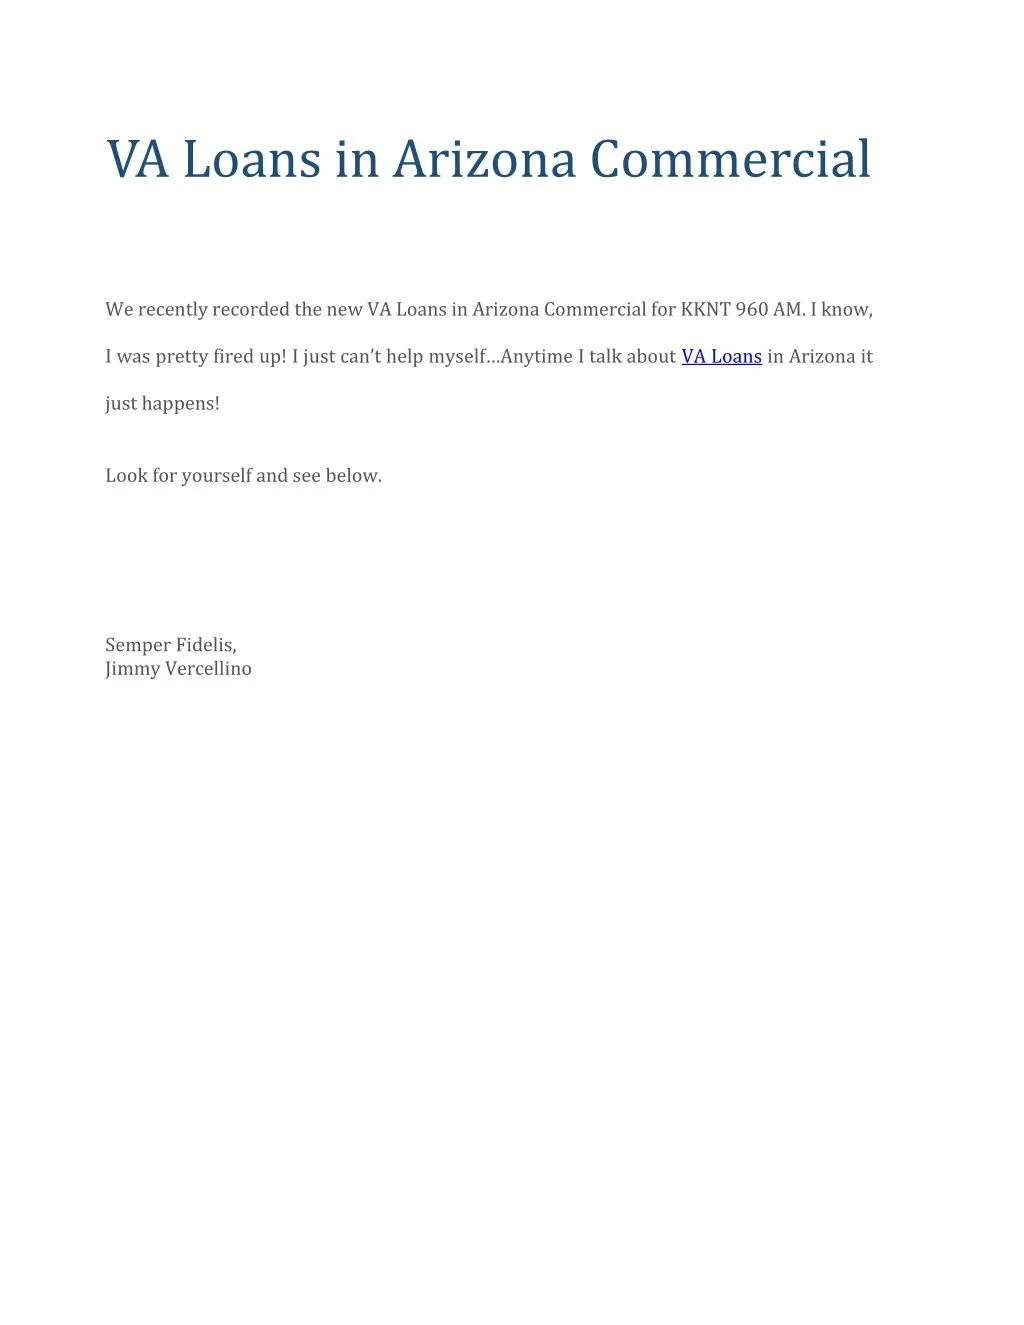 va loans in arizona commercial n.